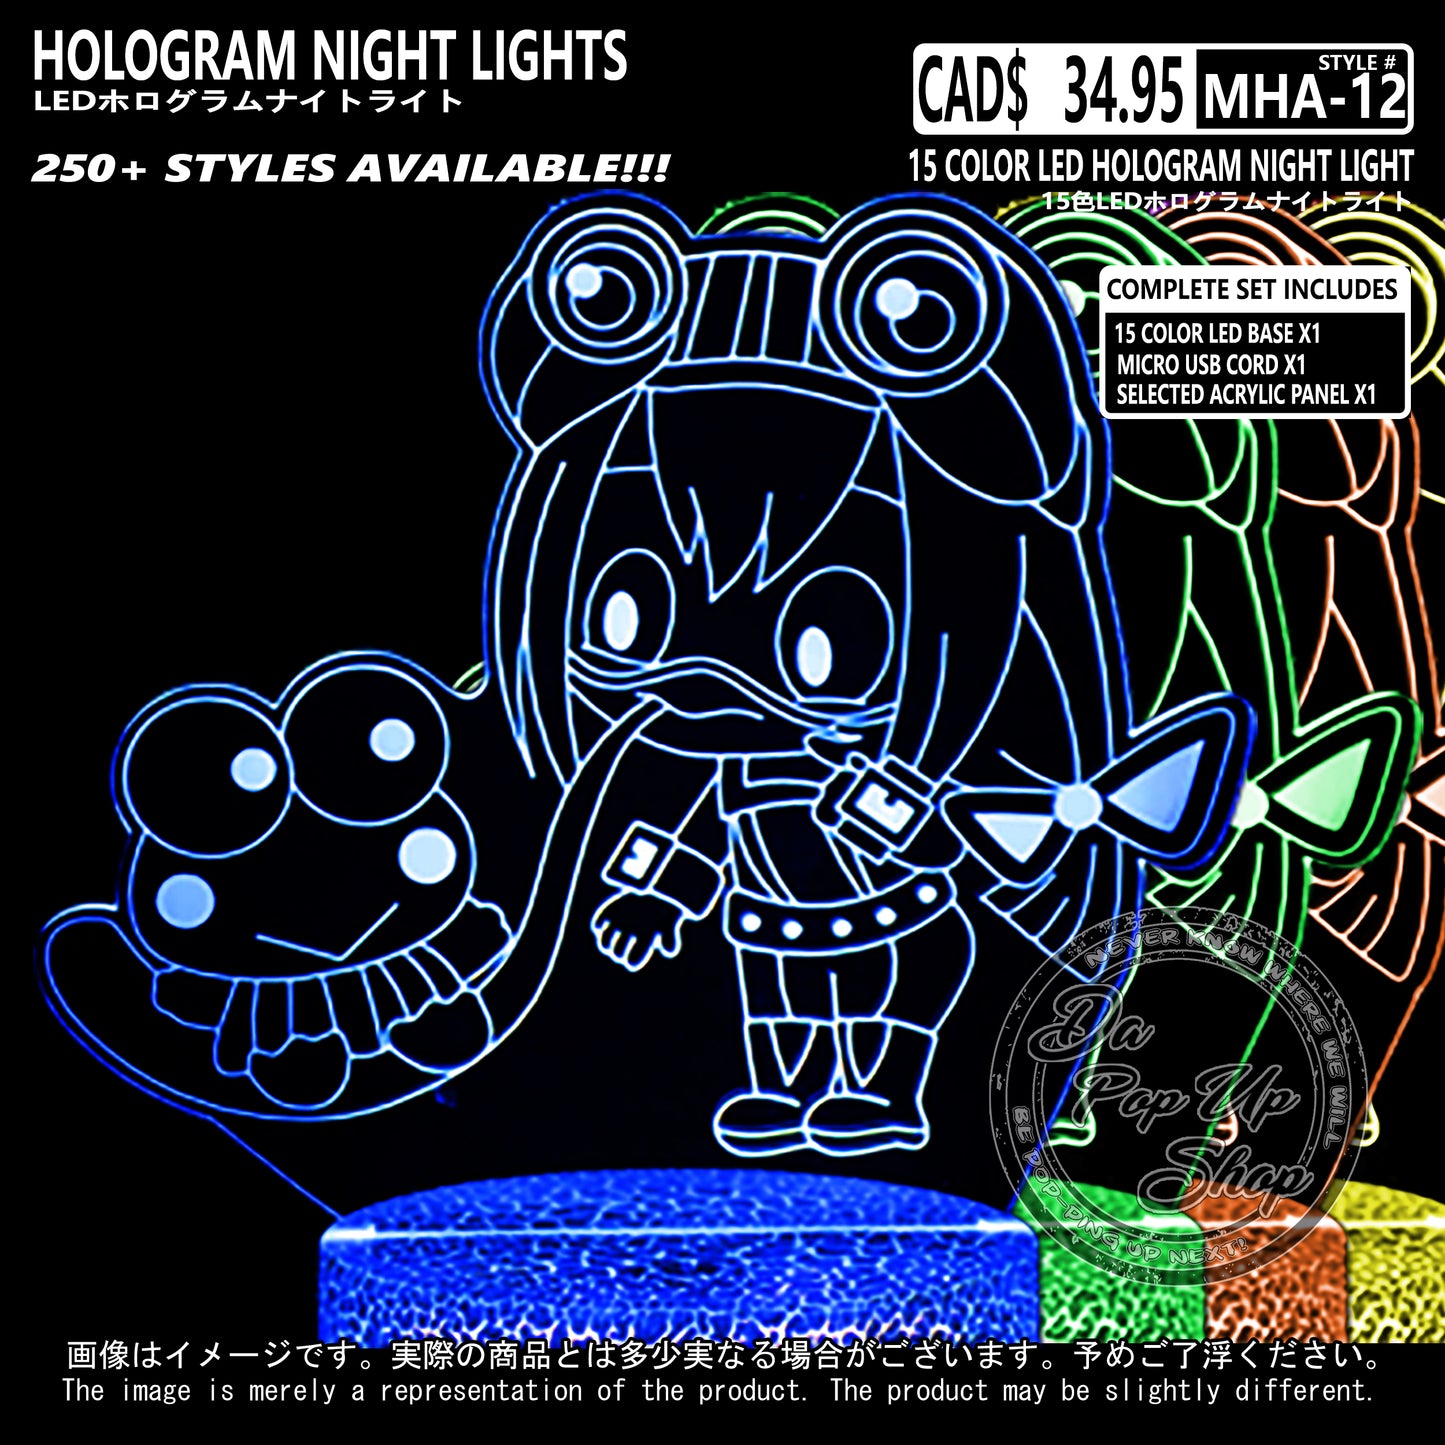 (MHA-12) My Hero Academia Hologram LED Night Light